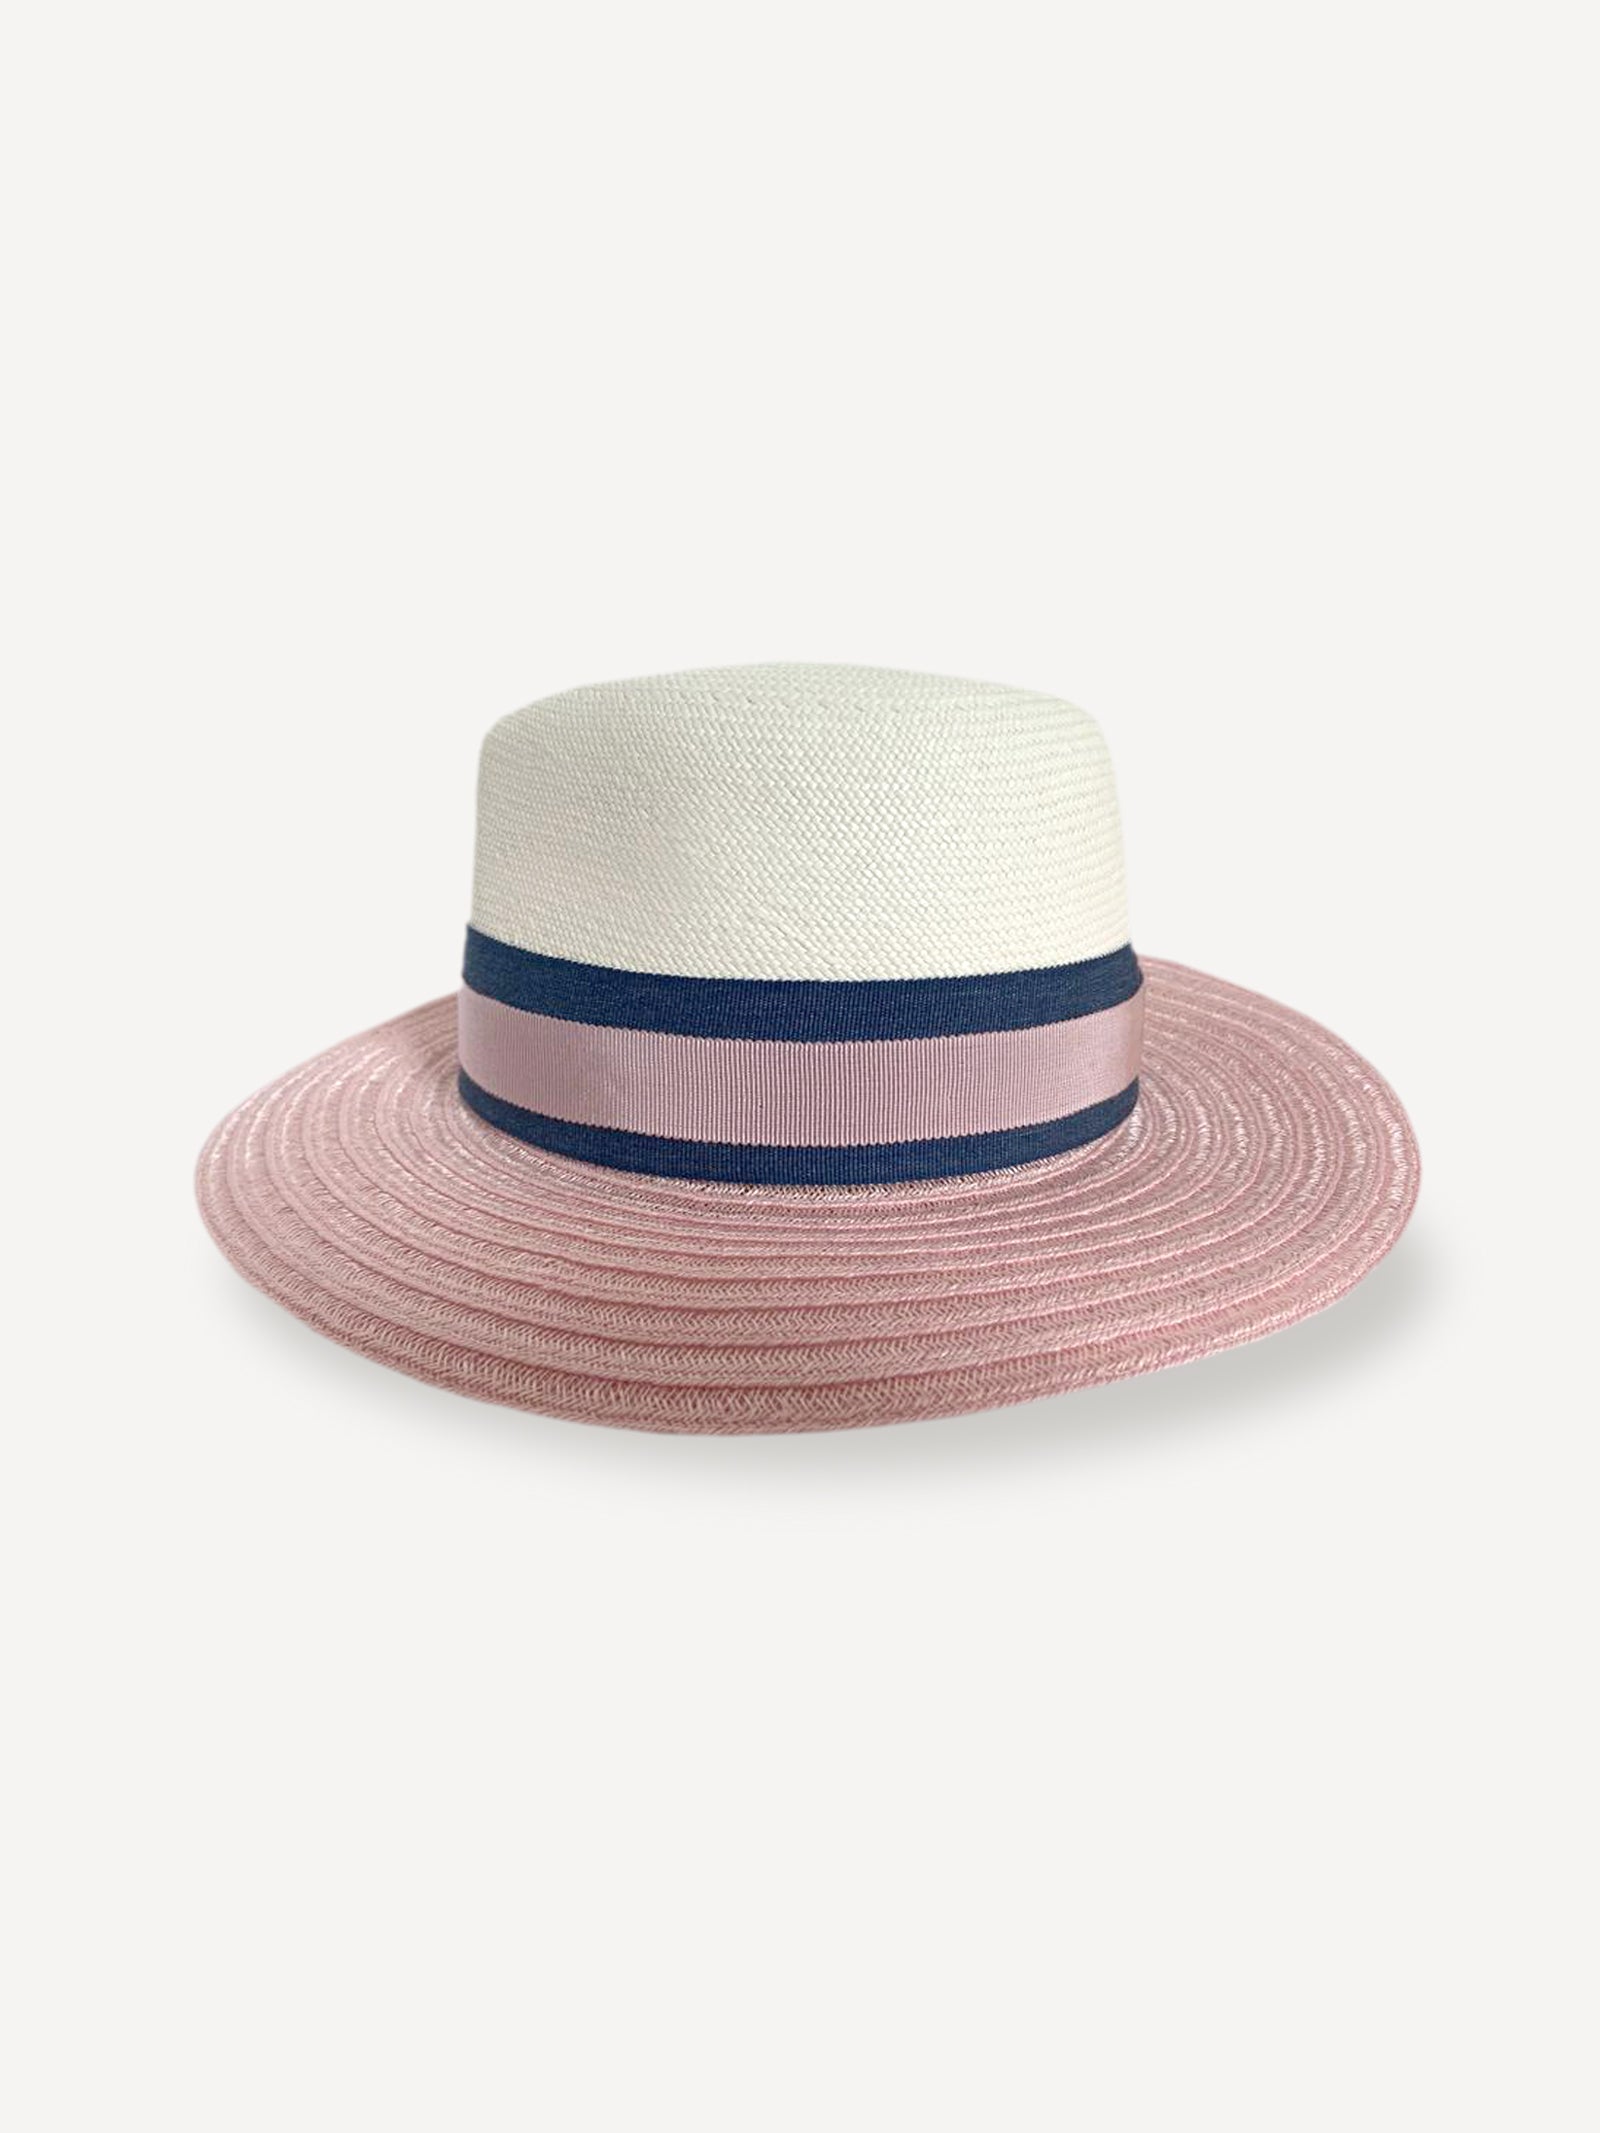 Capri Hat for woman 100% Capri straw white and pink hat